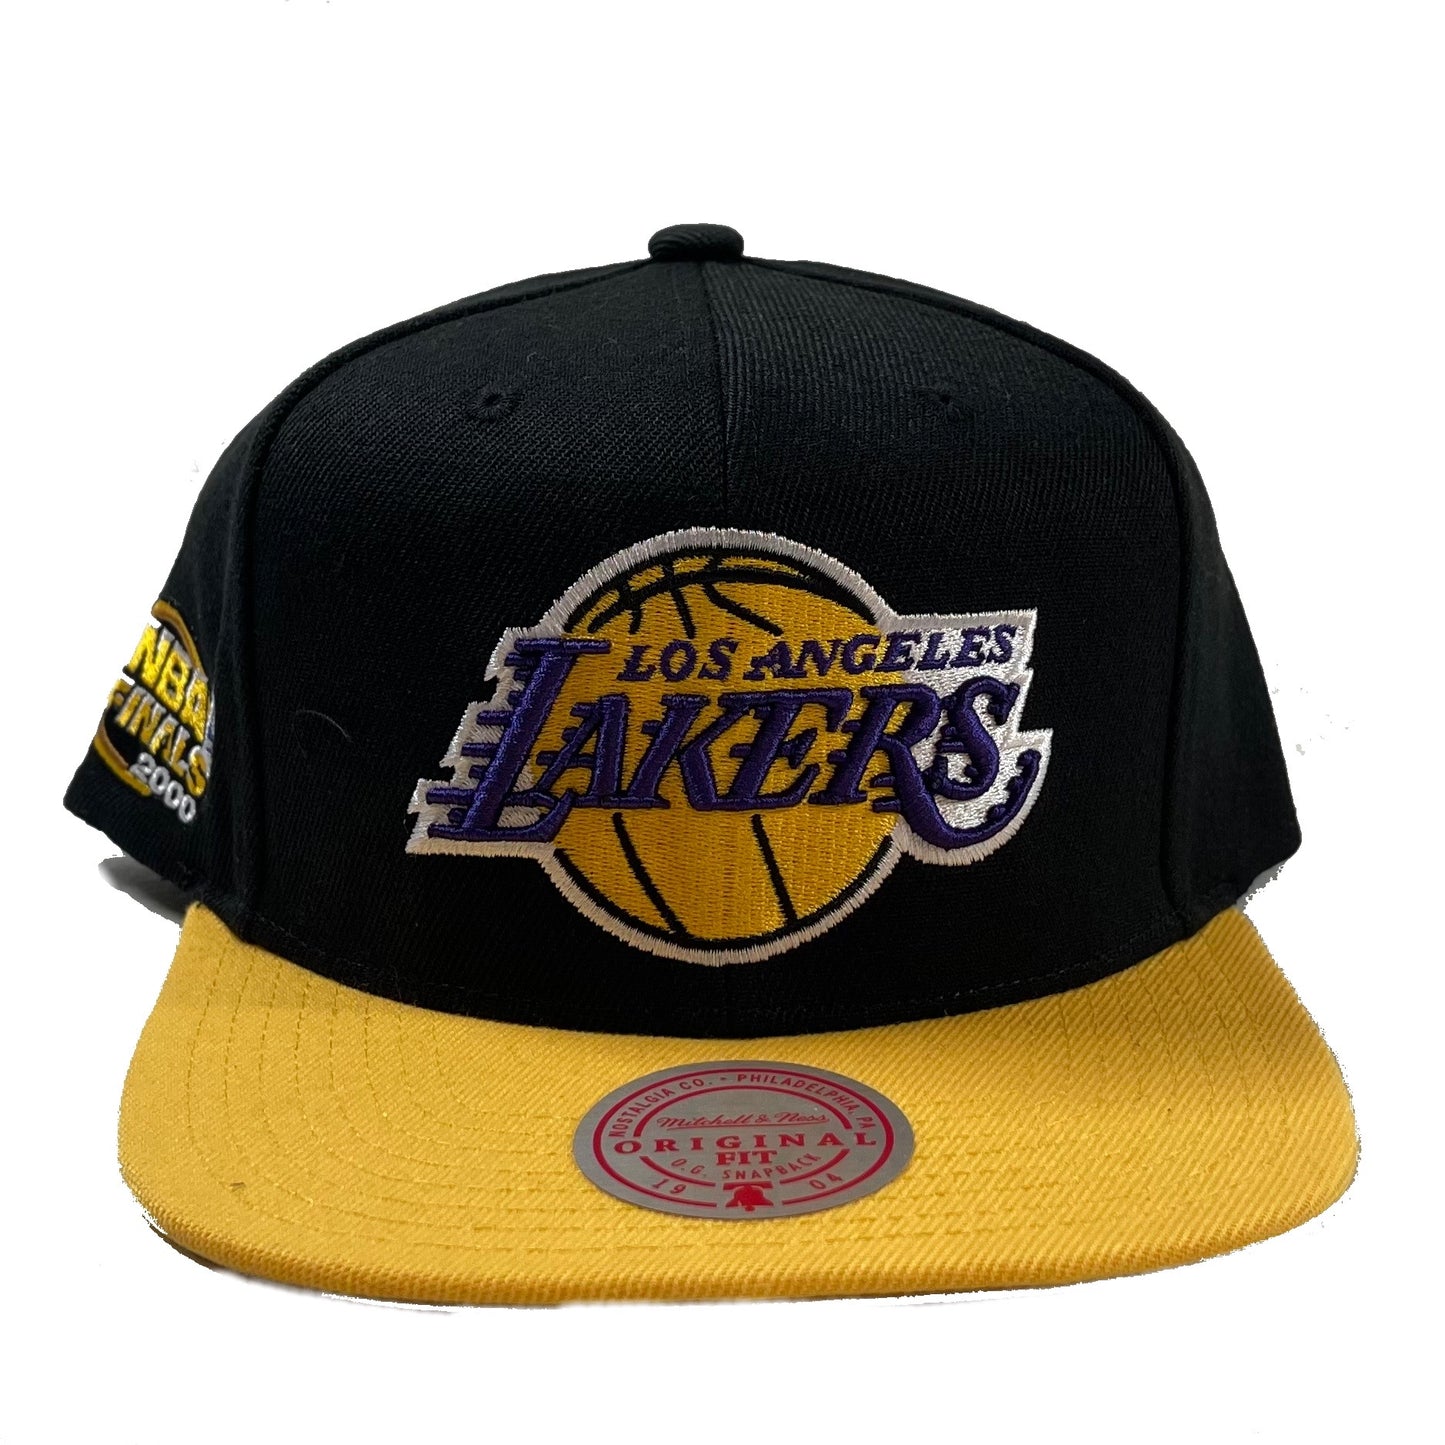 Los Angeles Lakers (Black/Yellow) Snapback